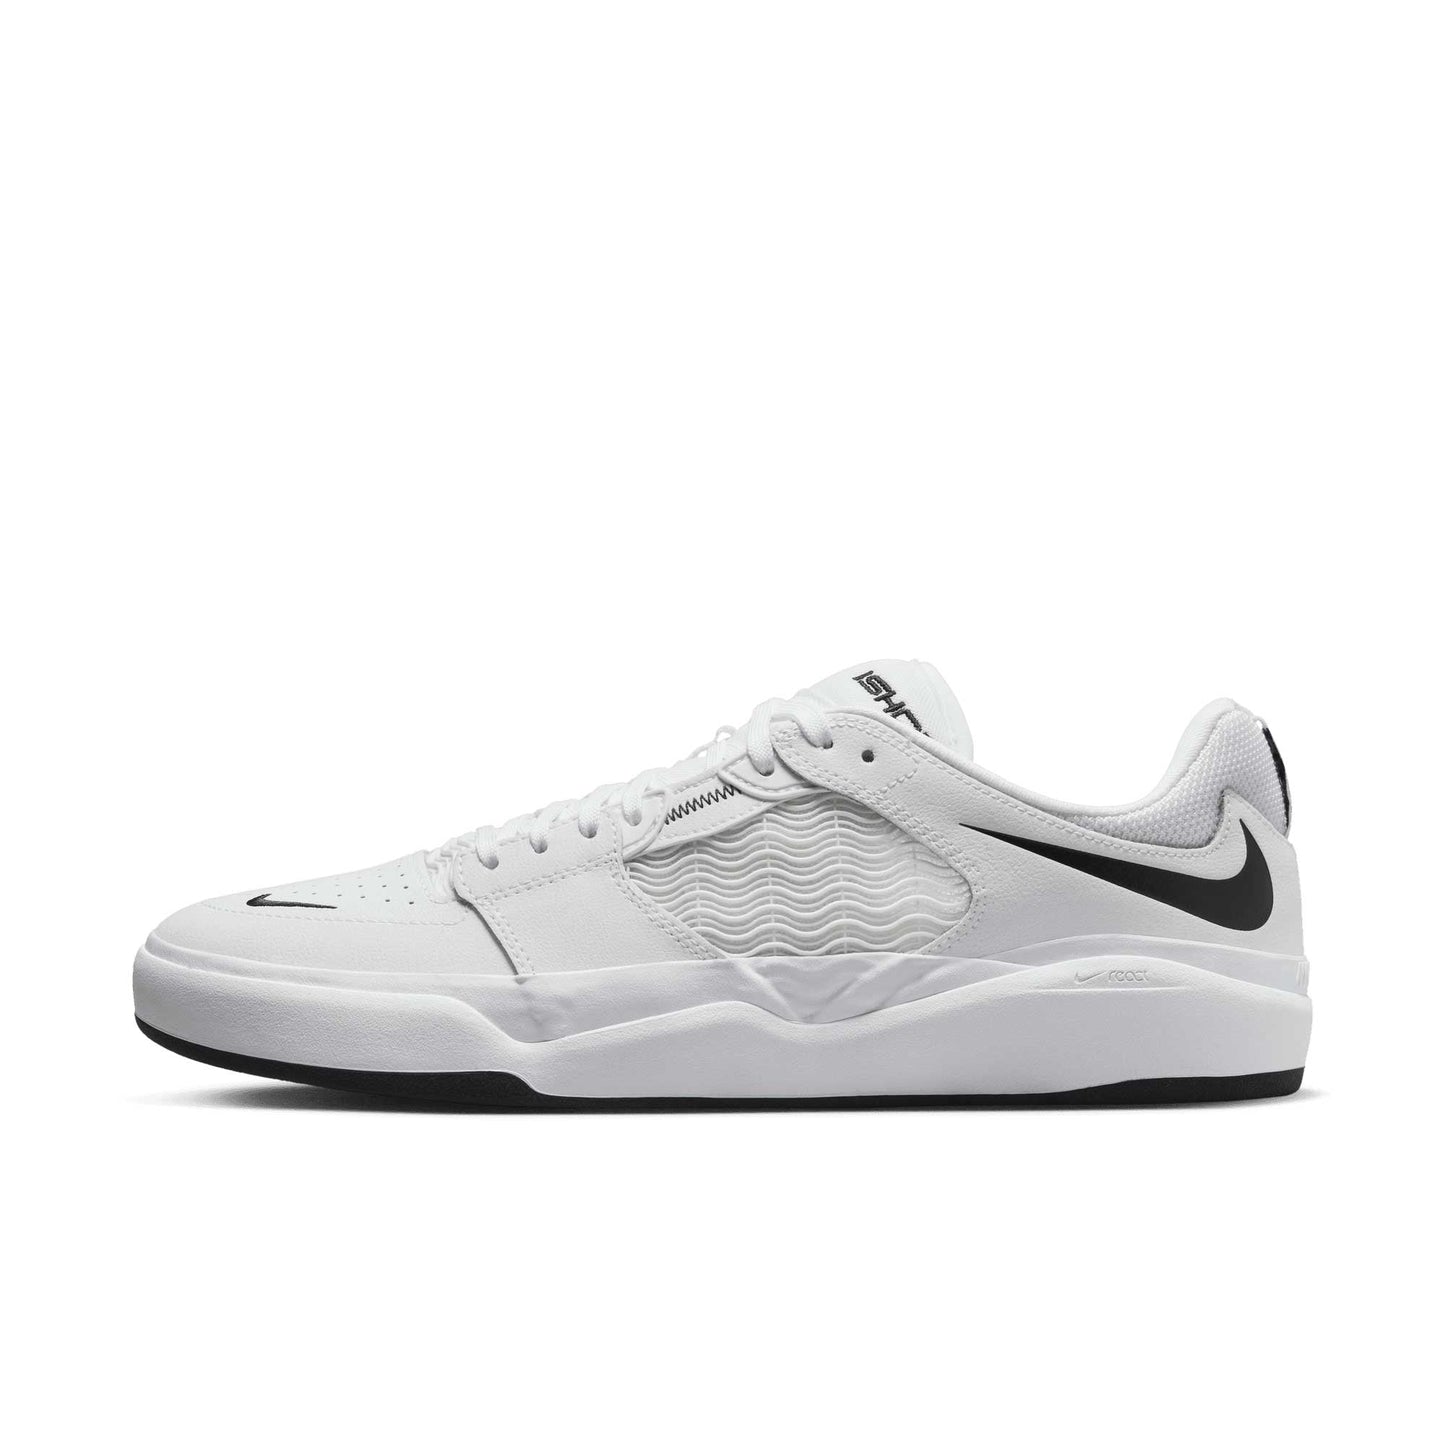 Nike SB Ishod Wair Premium, white/black-white-black - Tiki Room Skateboards - 5